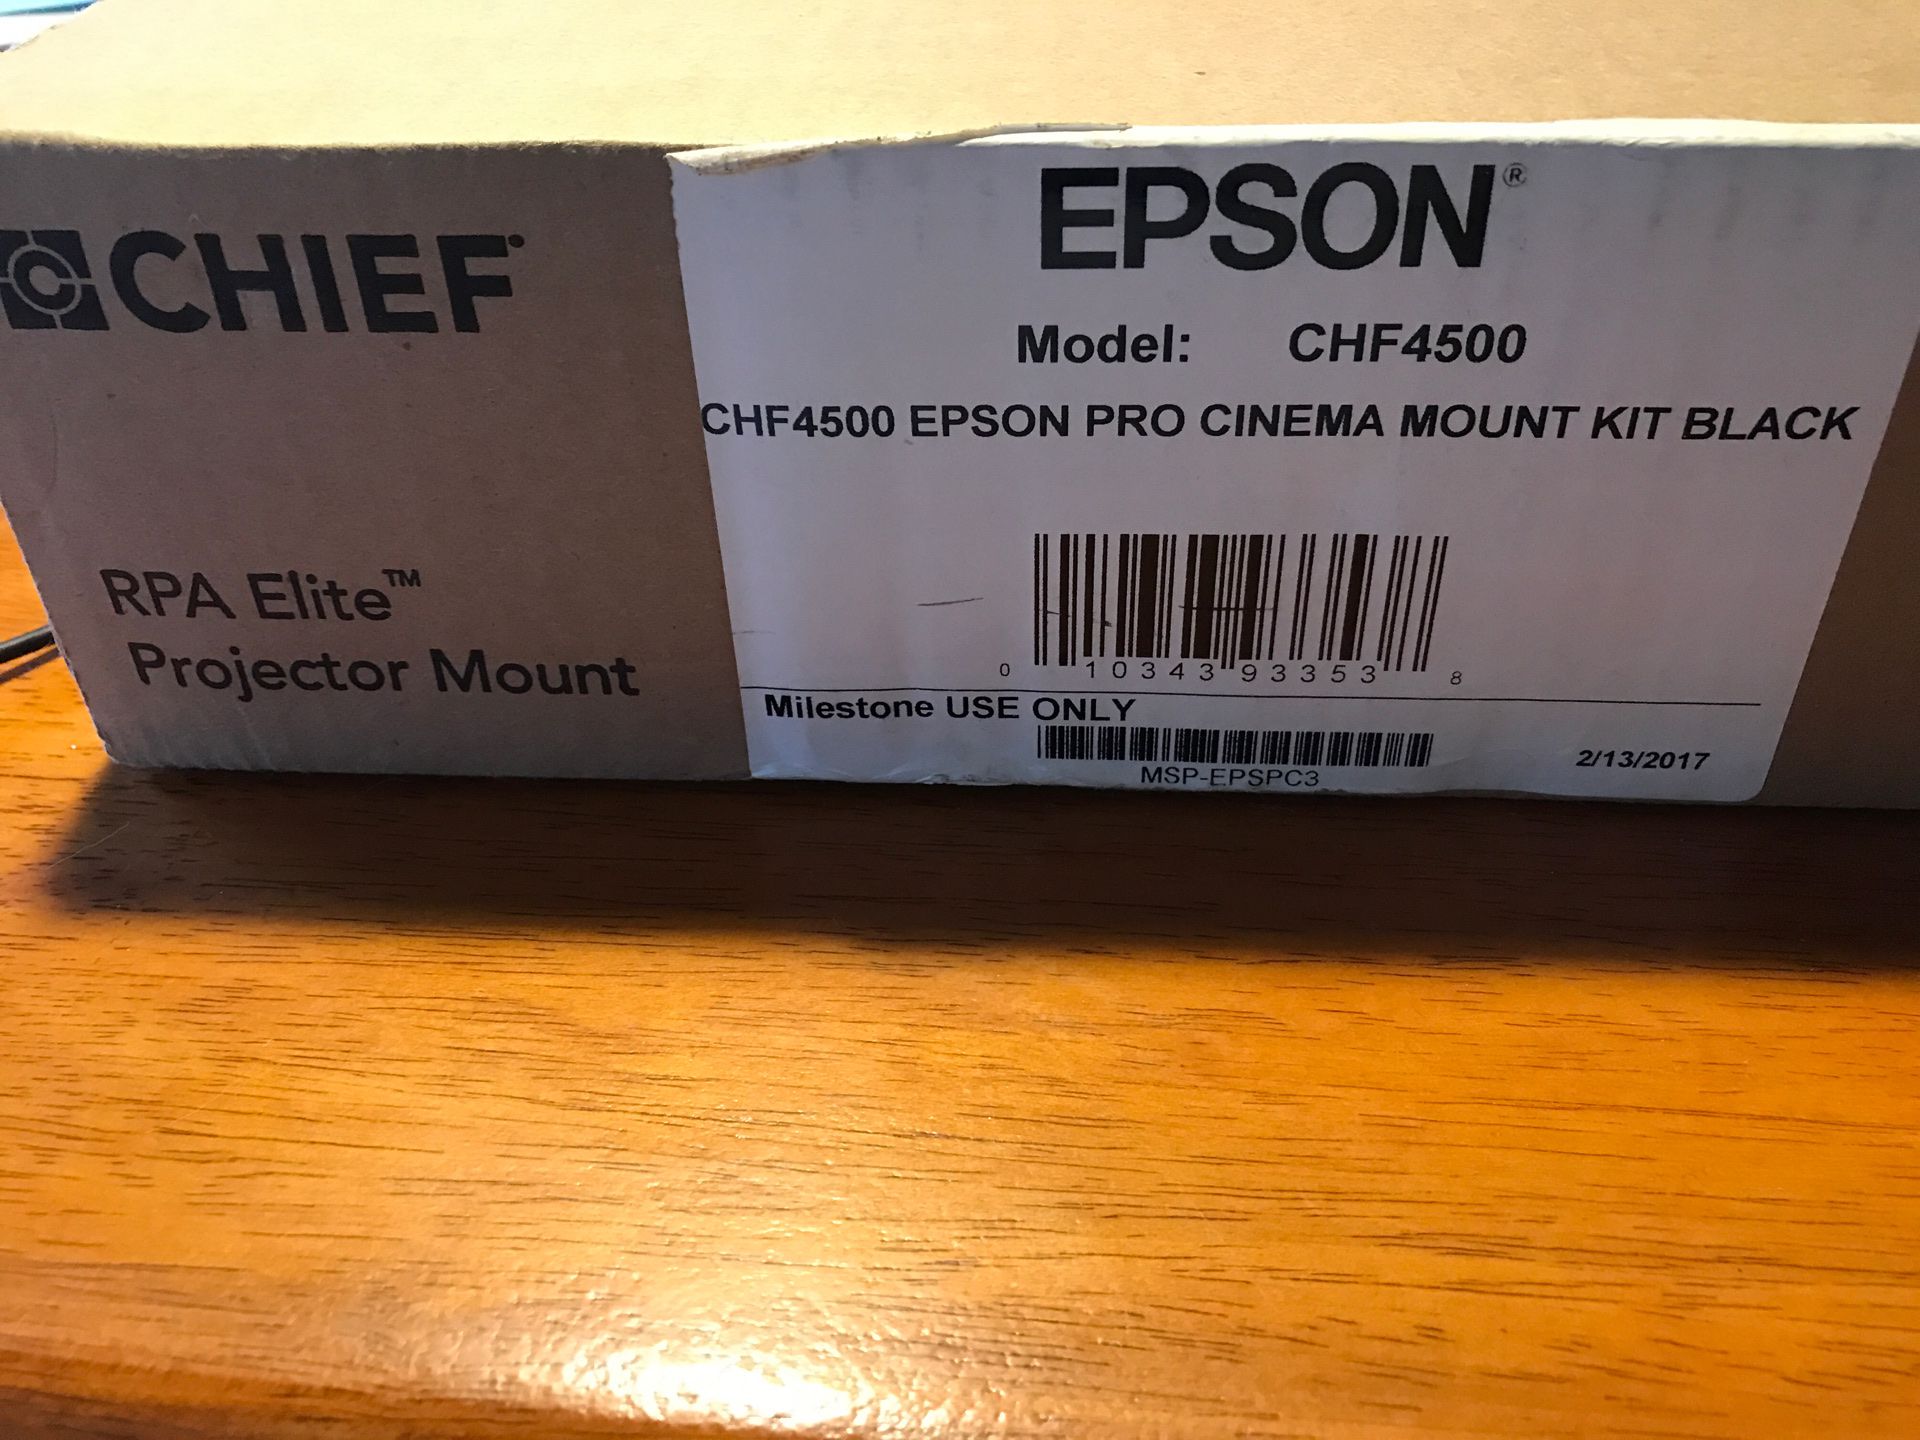 EPSON Pro Cinema Mount Kit Black